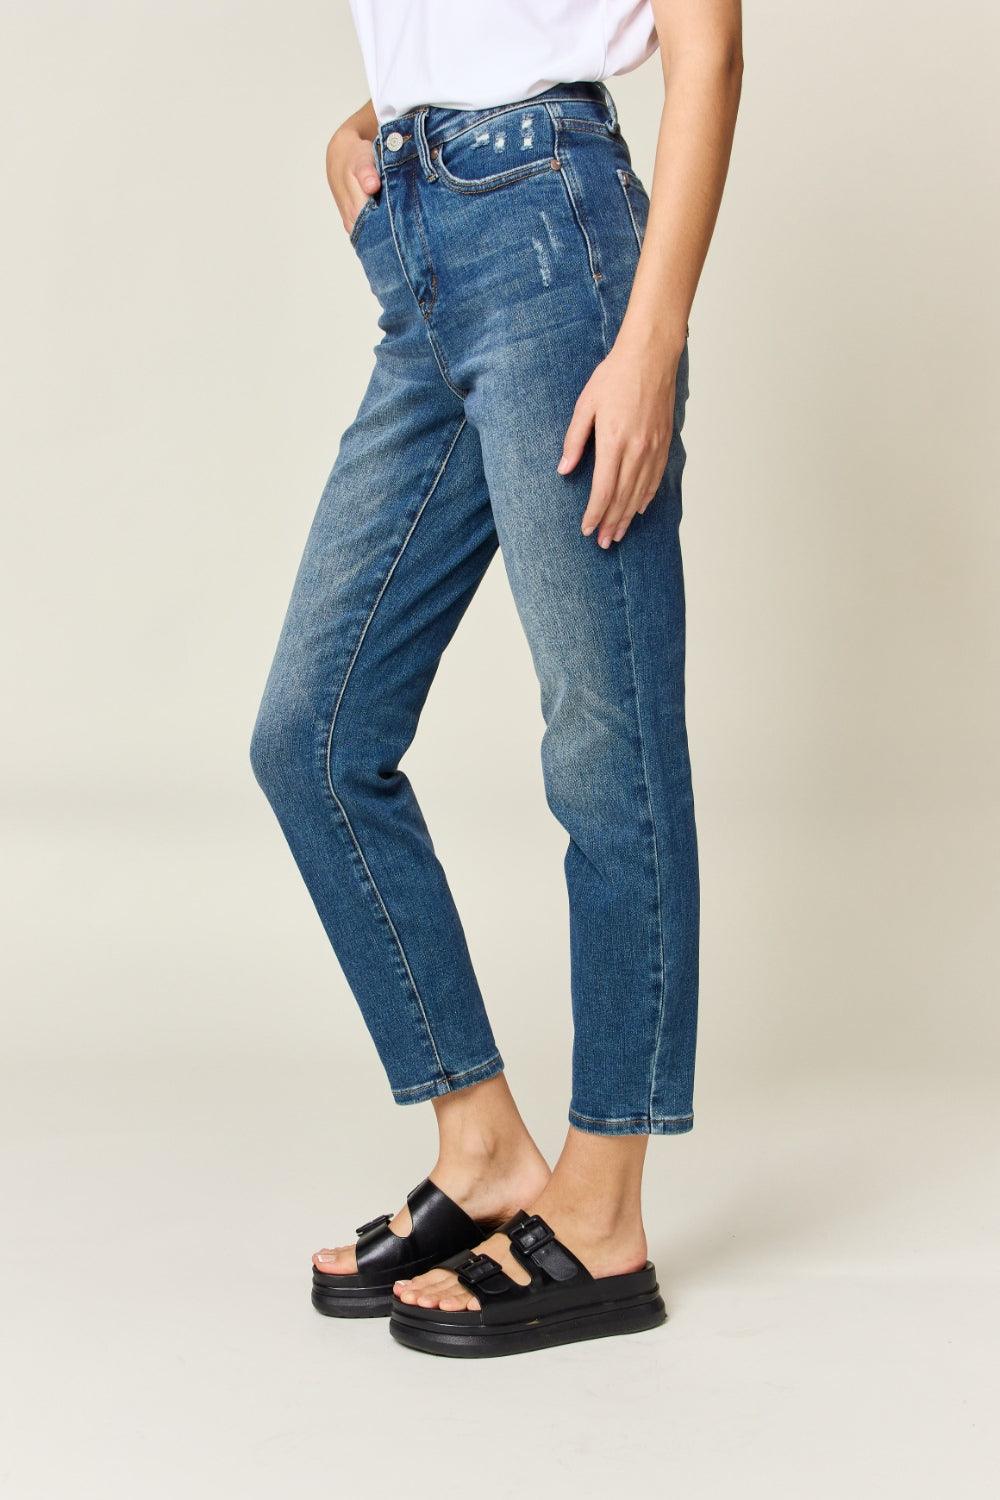 Judy Blue Tummy Control High Waist Slim Jeans - Jessiz Boutique